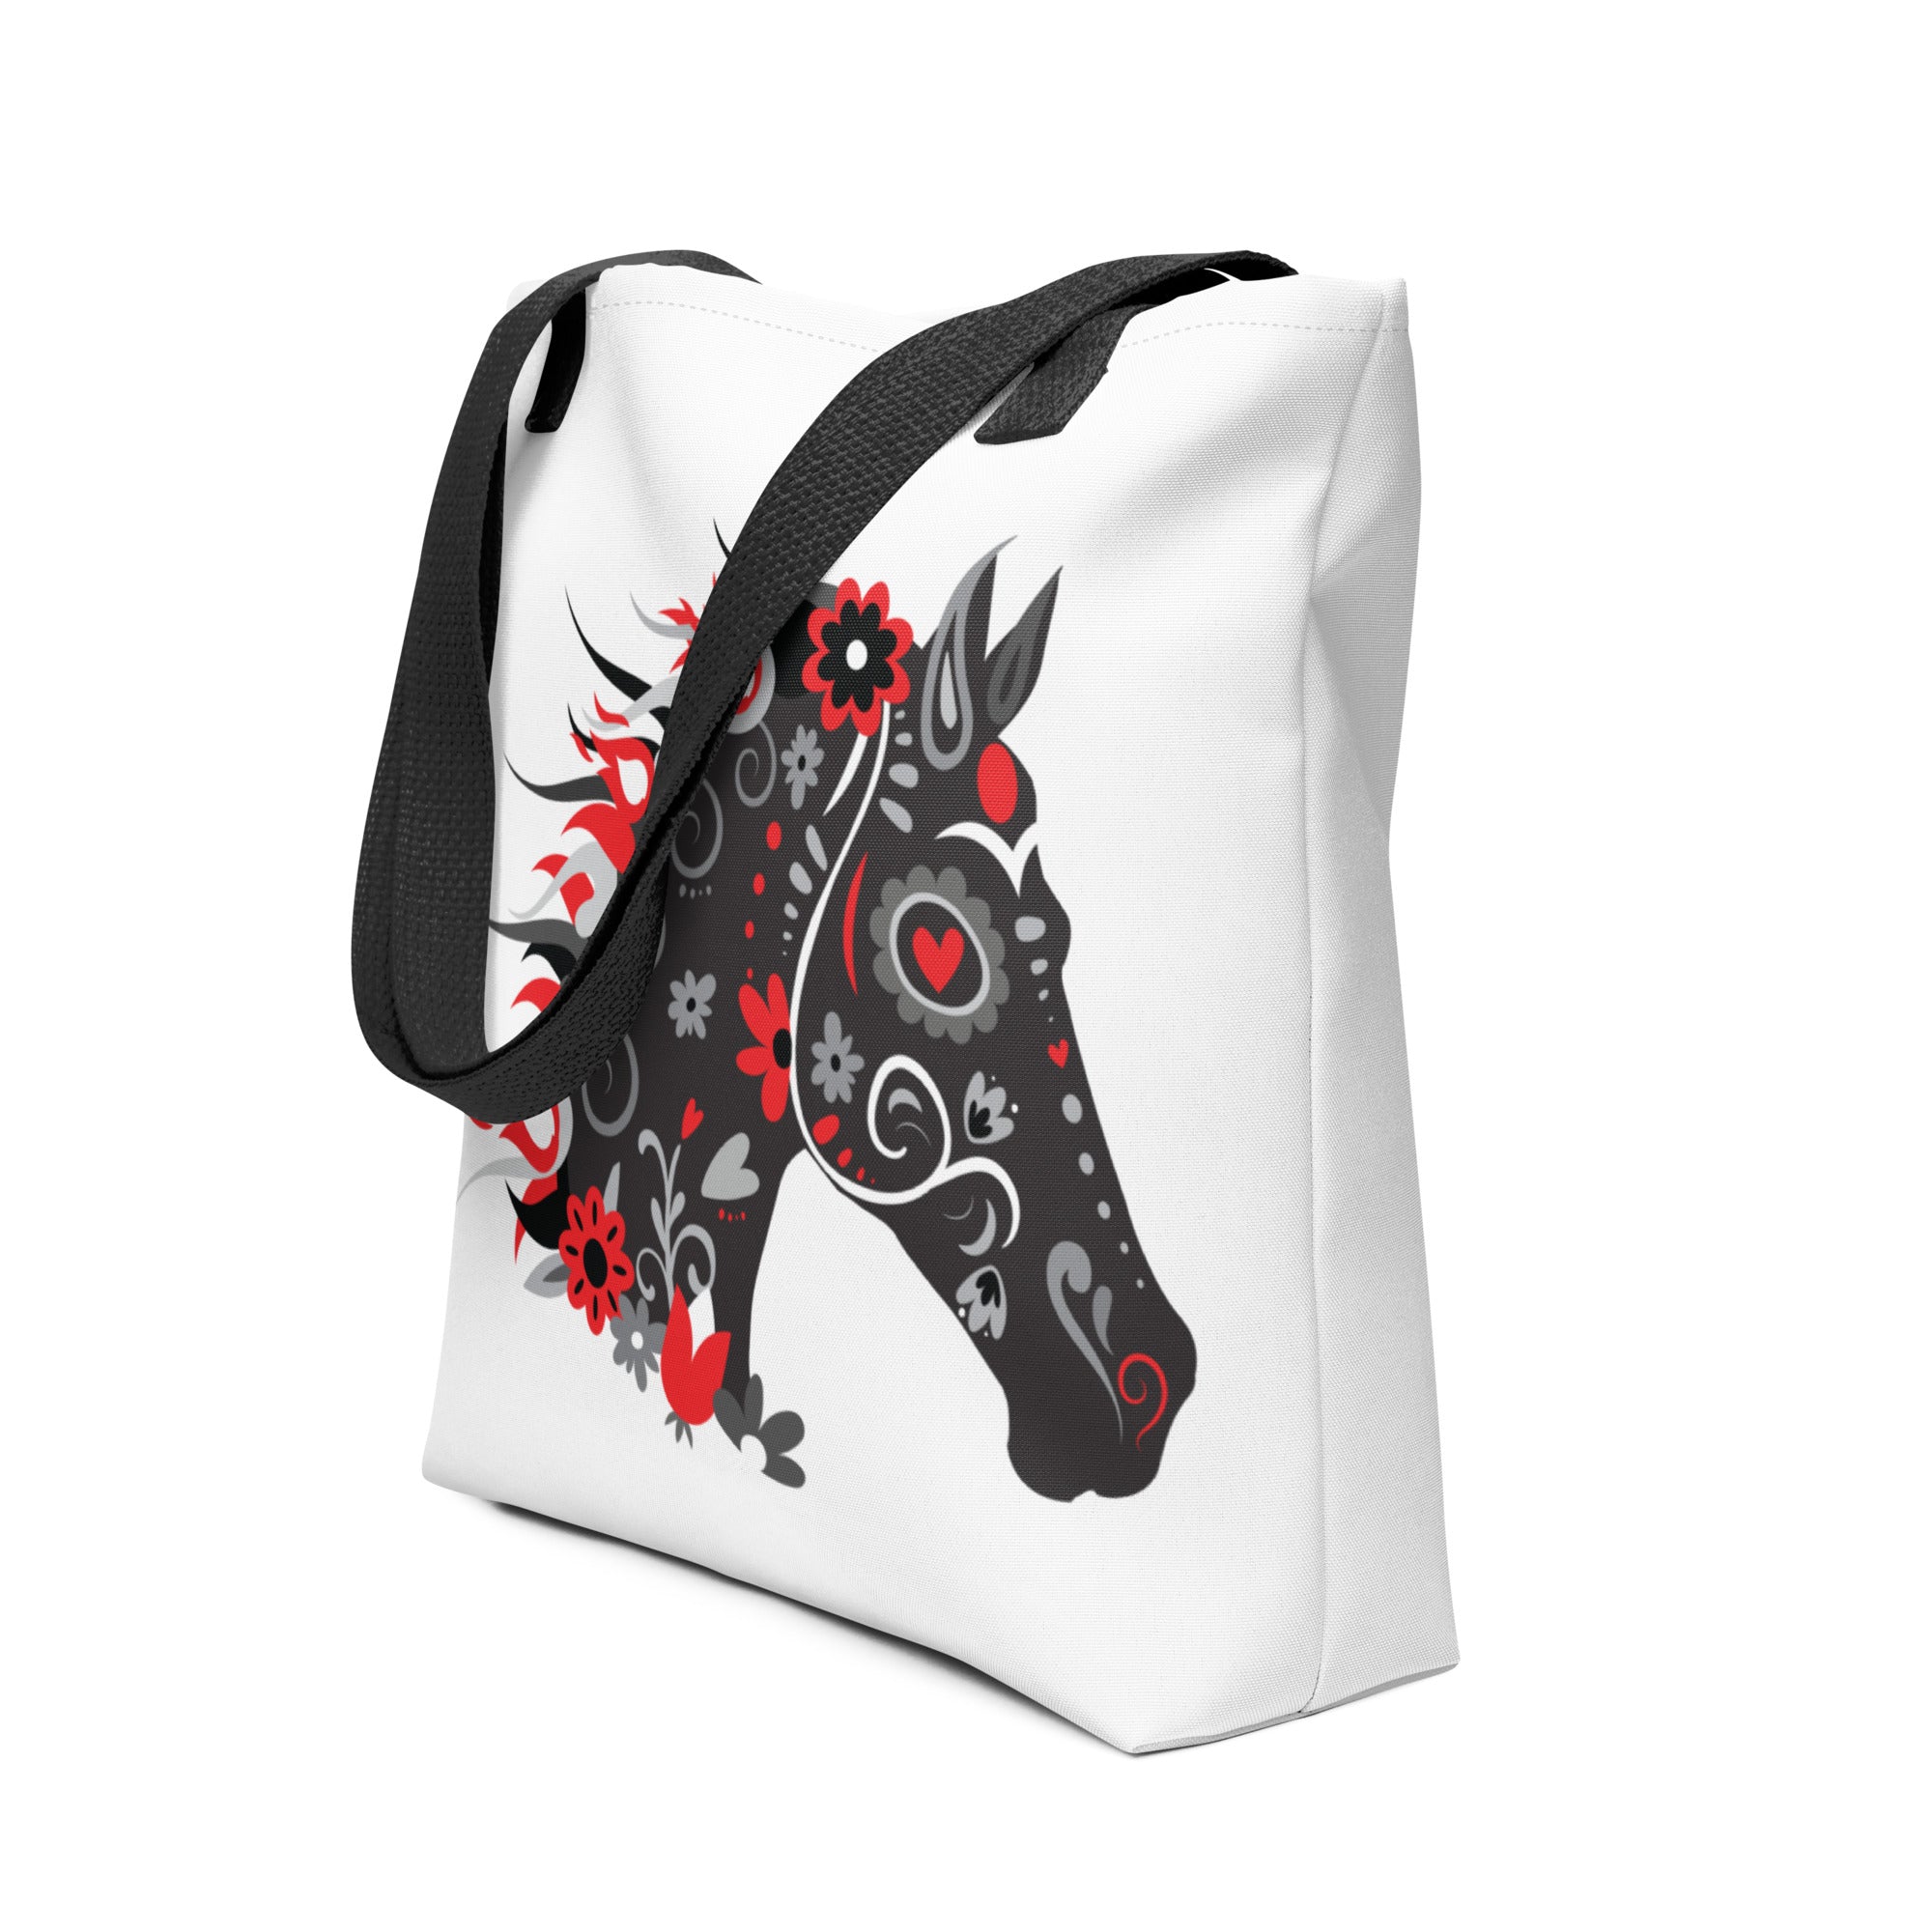 Alfenique Black Horse Tote Bag